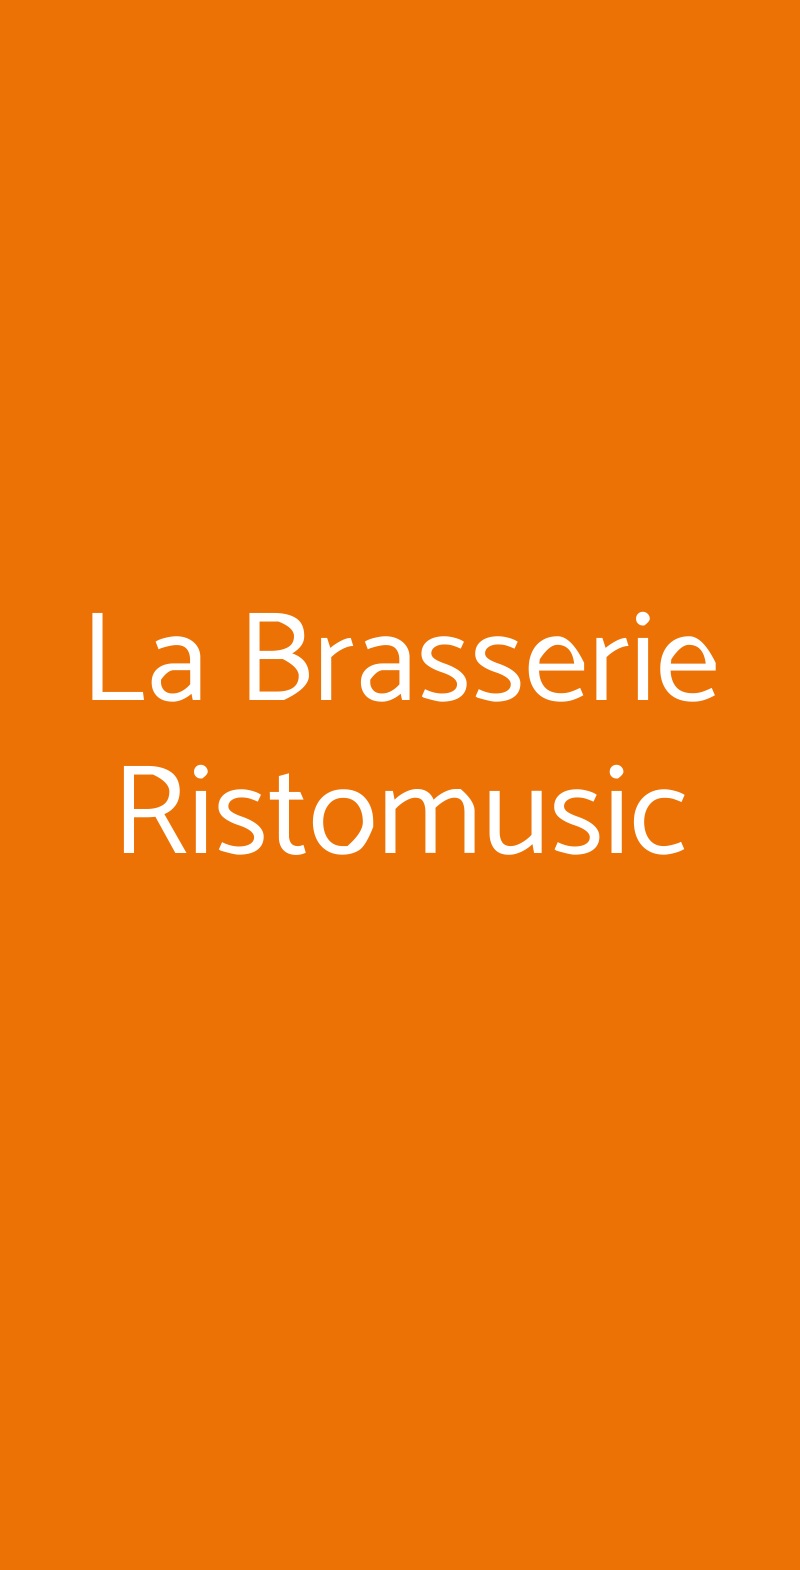 La Brasserie Ristomusic Napoli menù 1 pagina